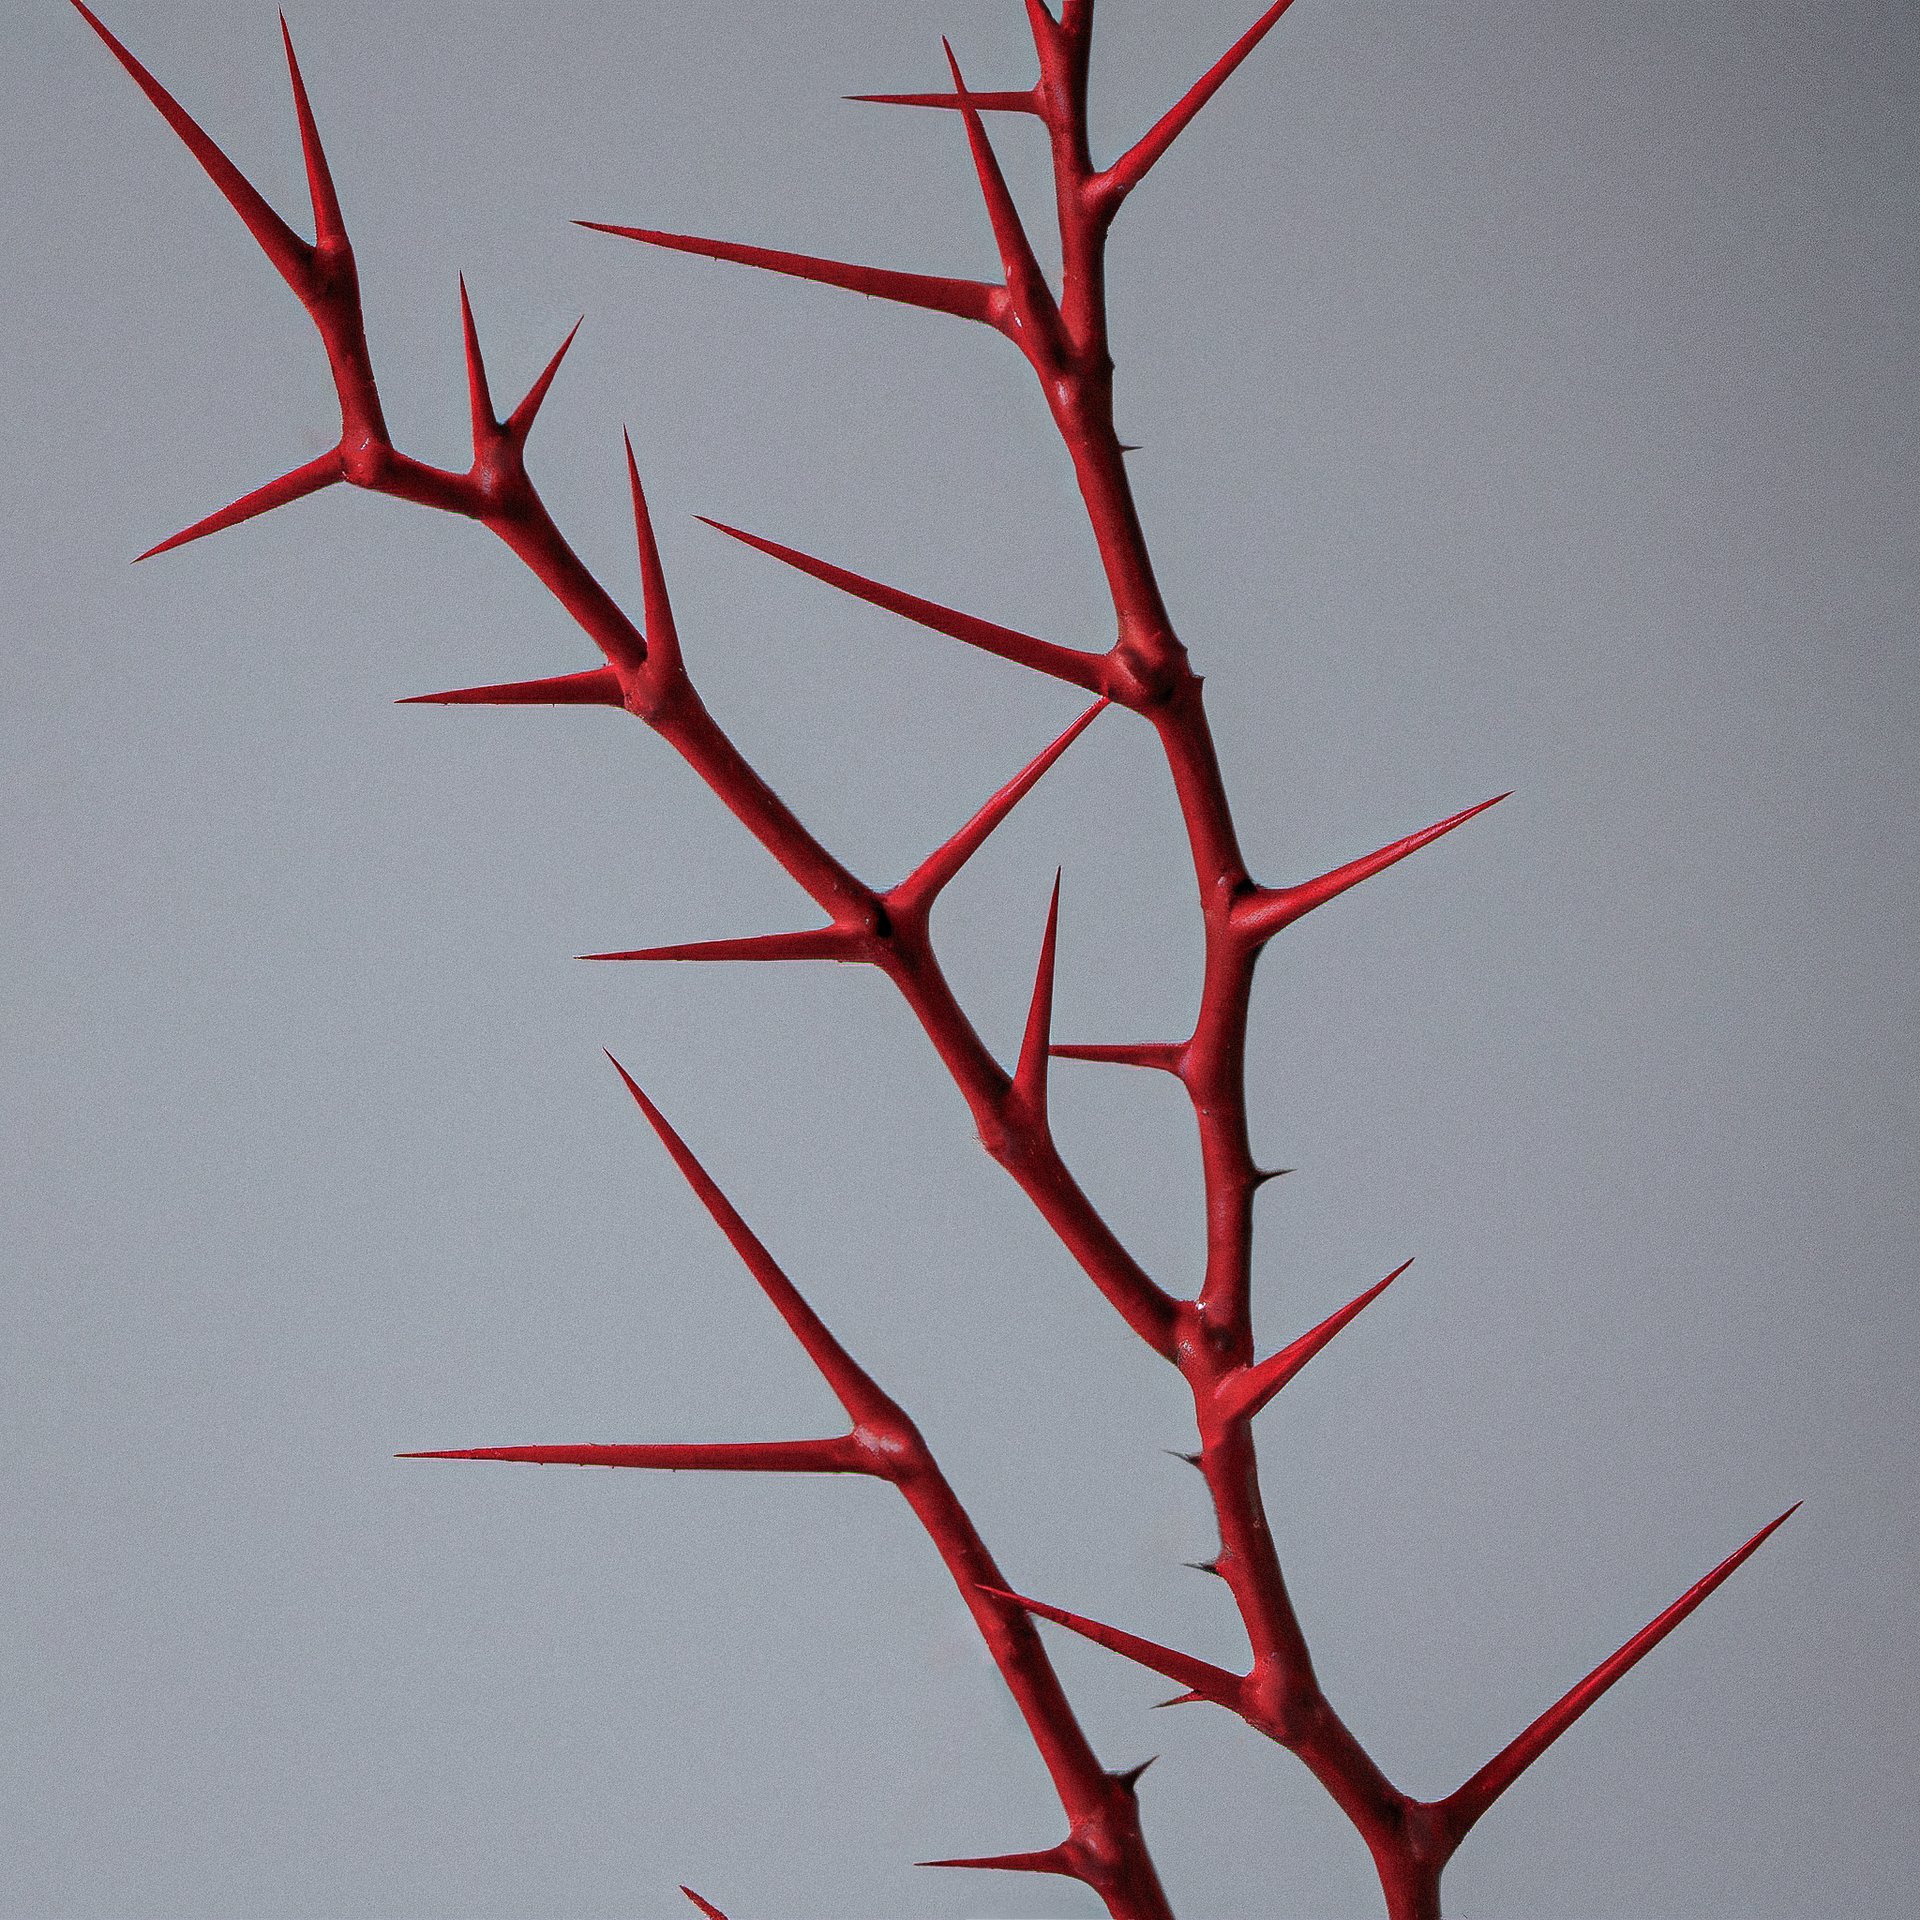 Red thorn stem